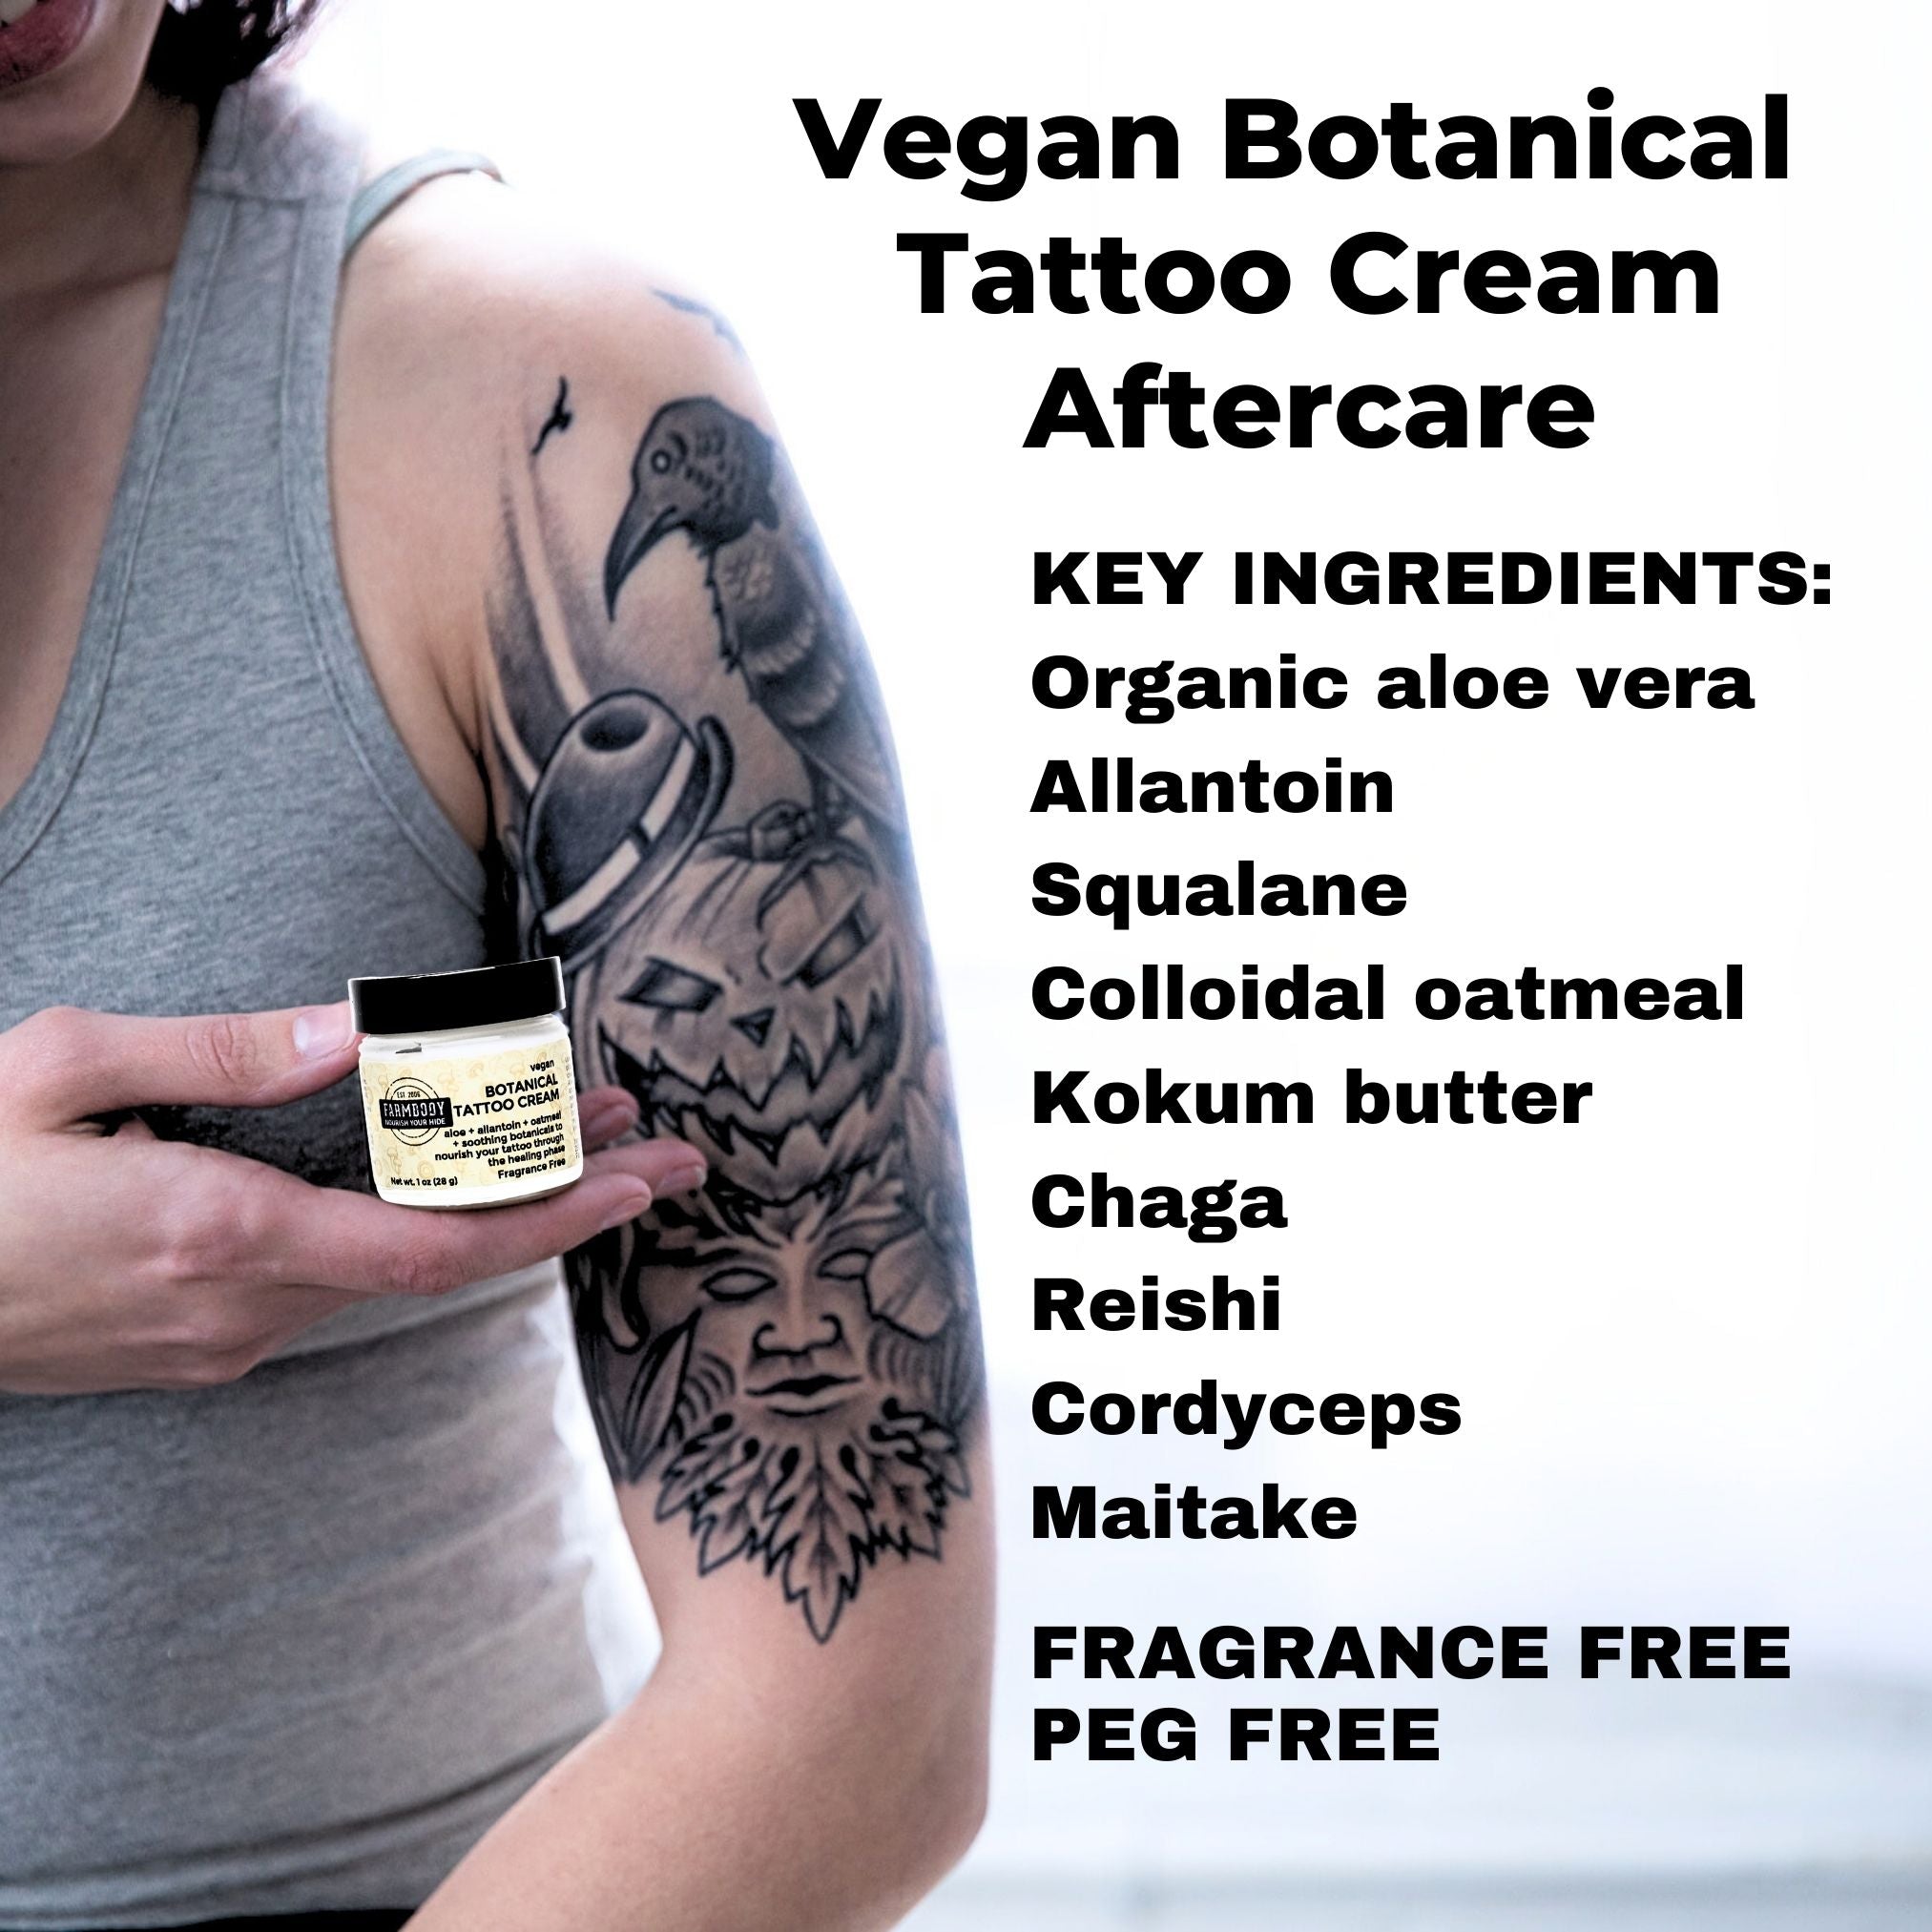 Dulac Tattoo Aftercare Cream – Tattoo Unleashed